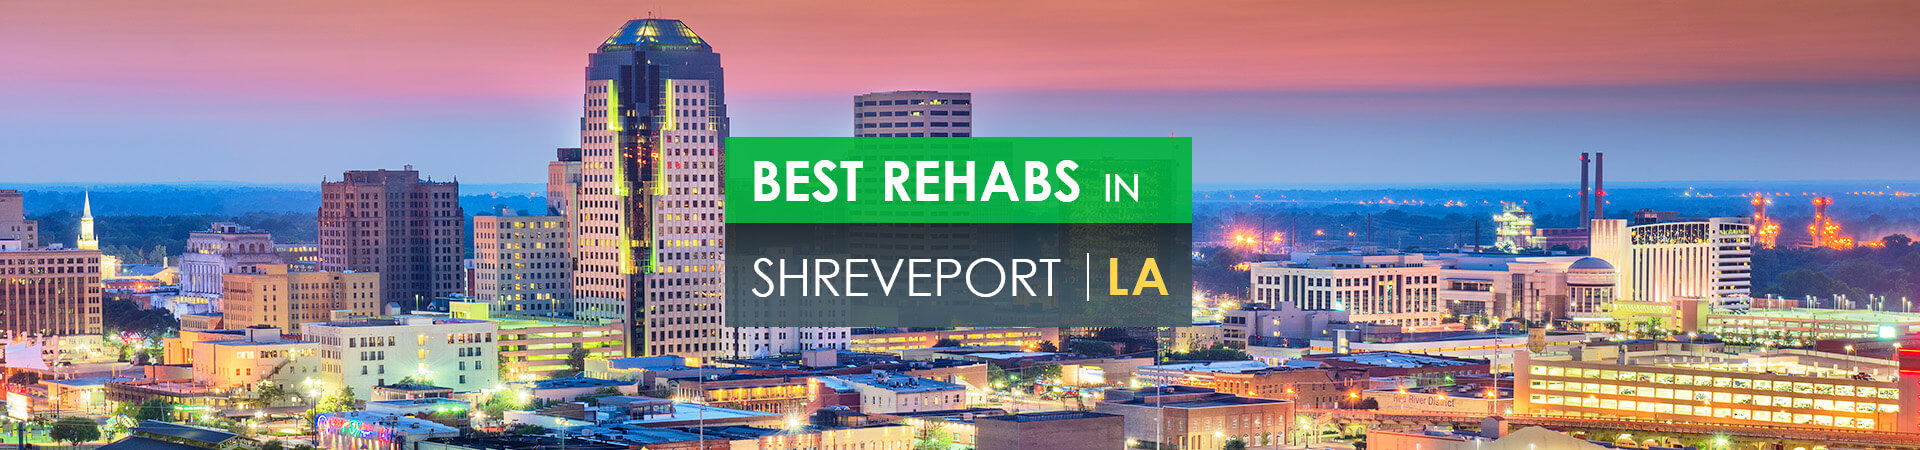 Best rehabs in Shreveport, LA